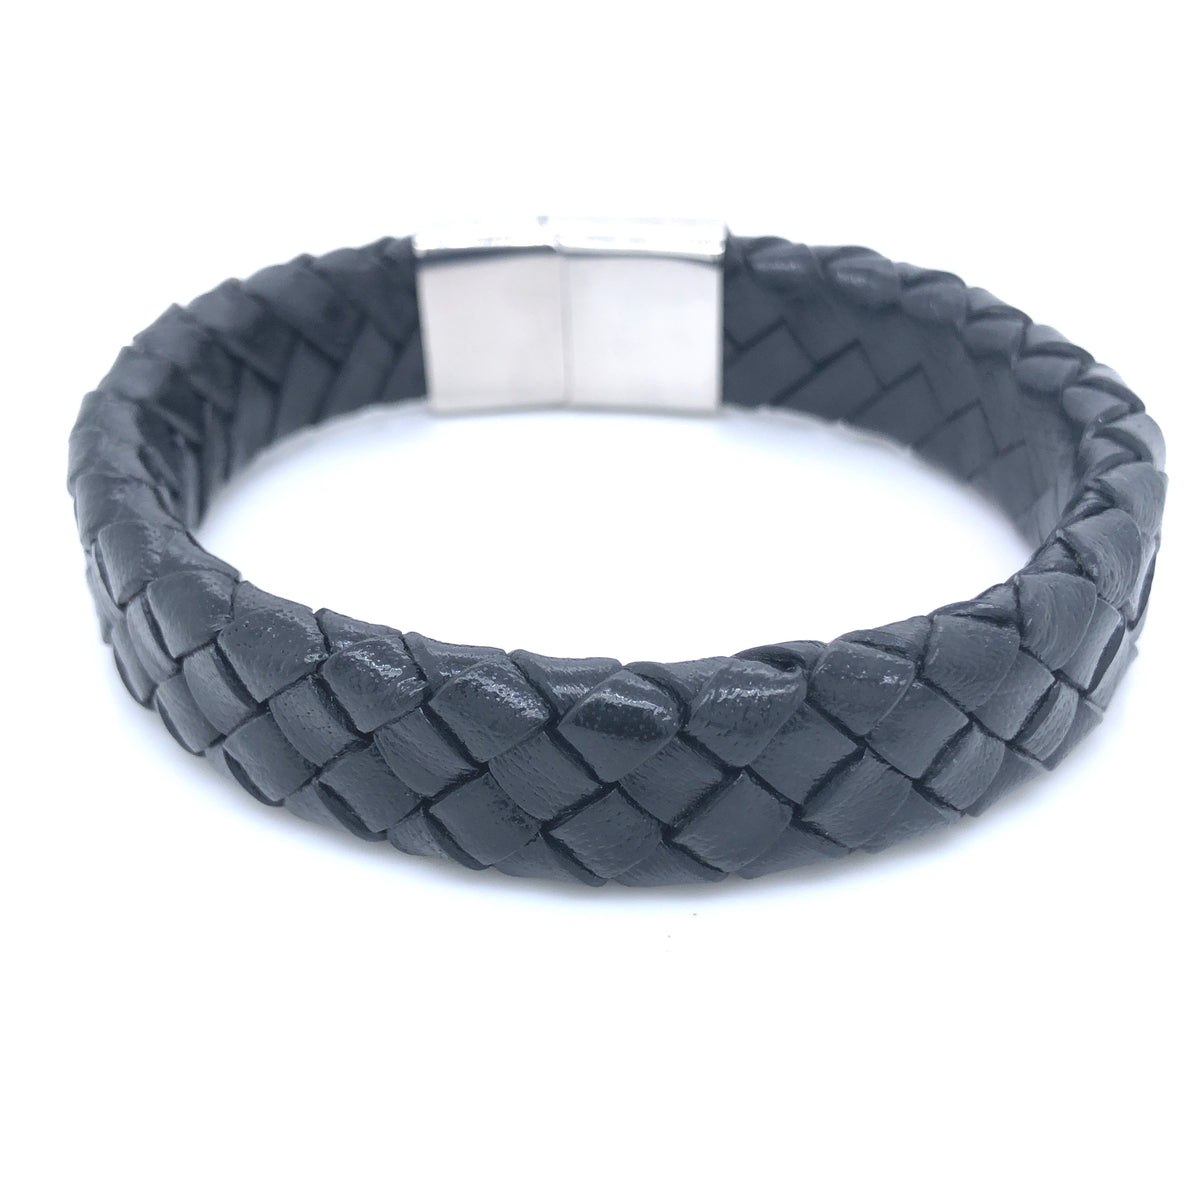 Black Leather Wide Braided Bracelet